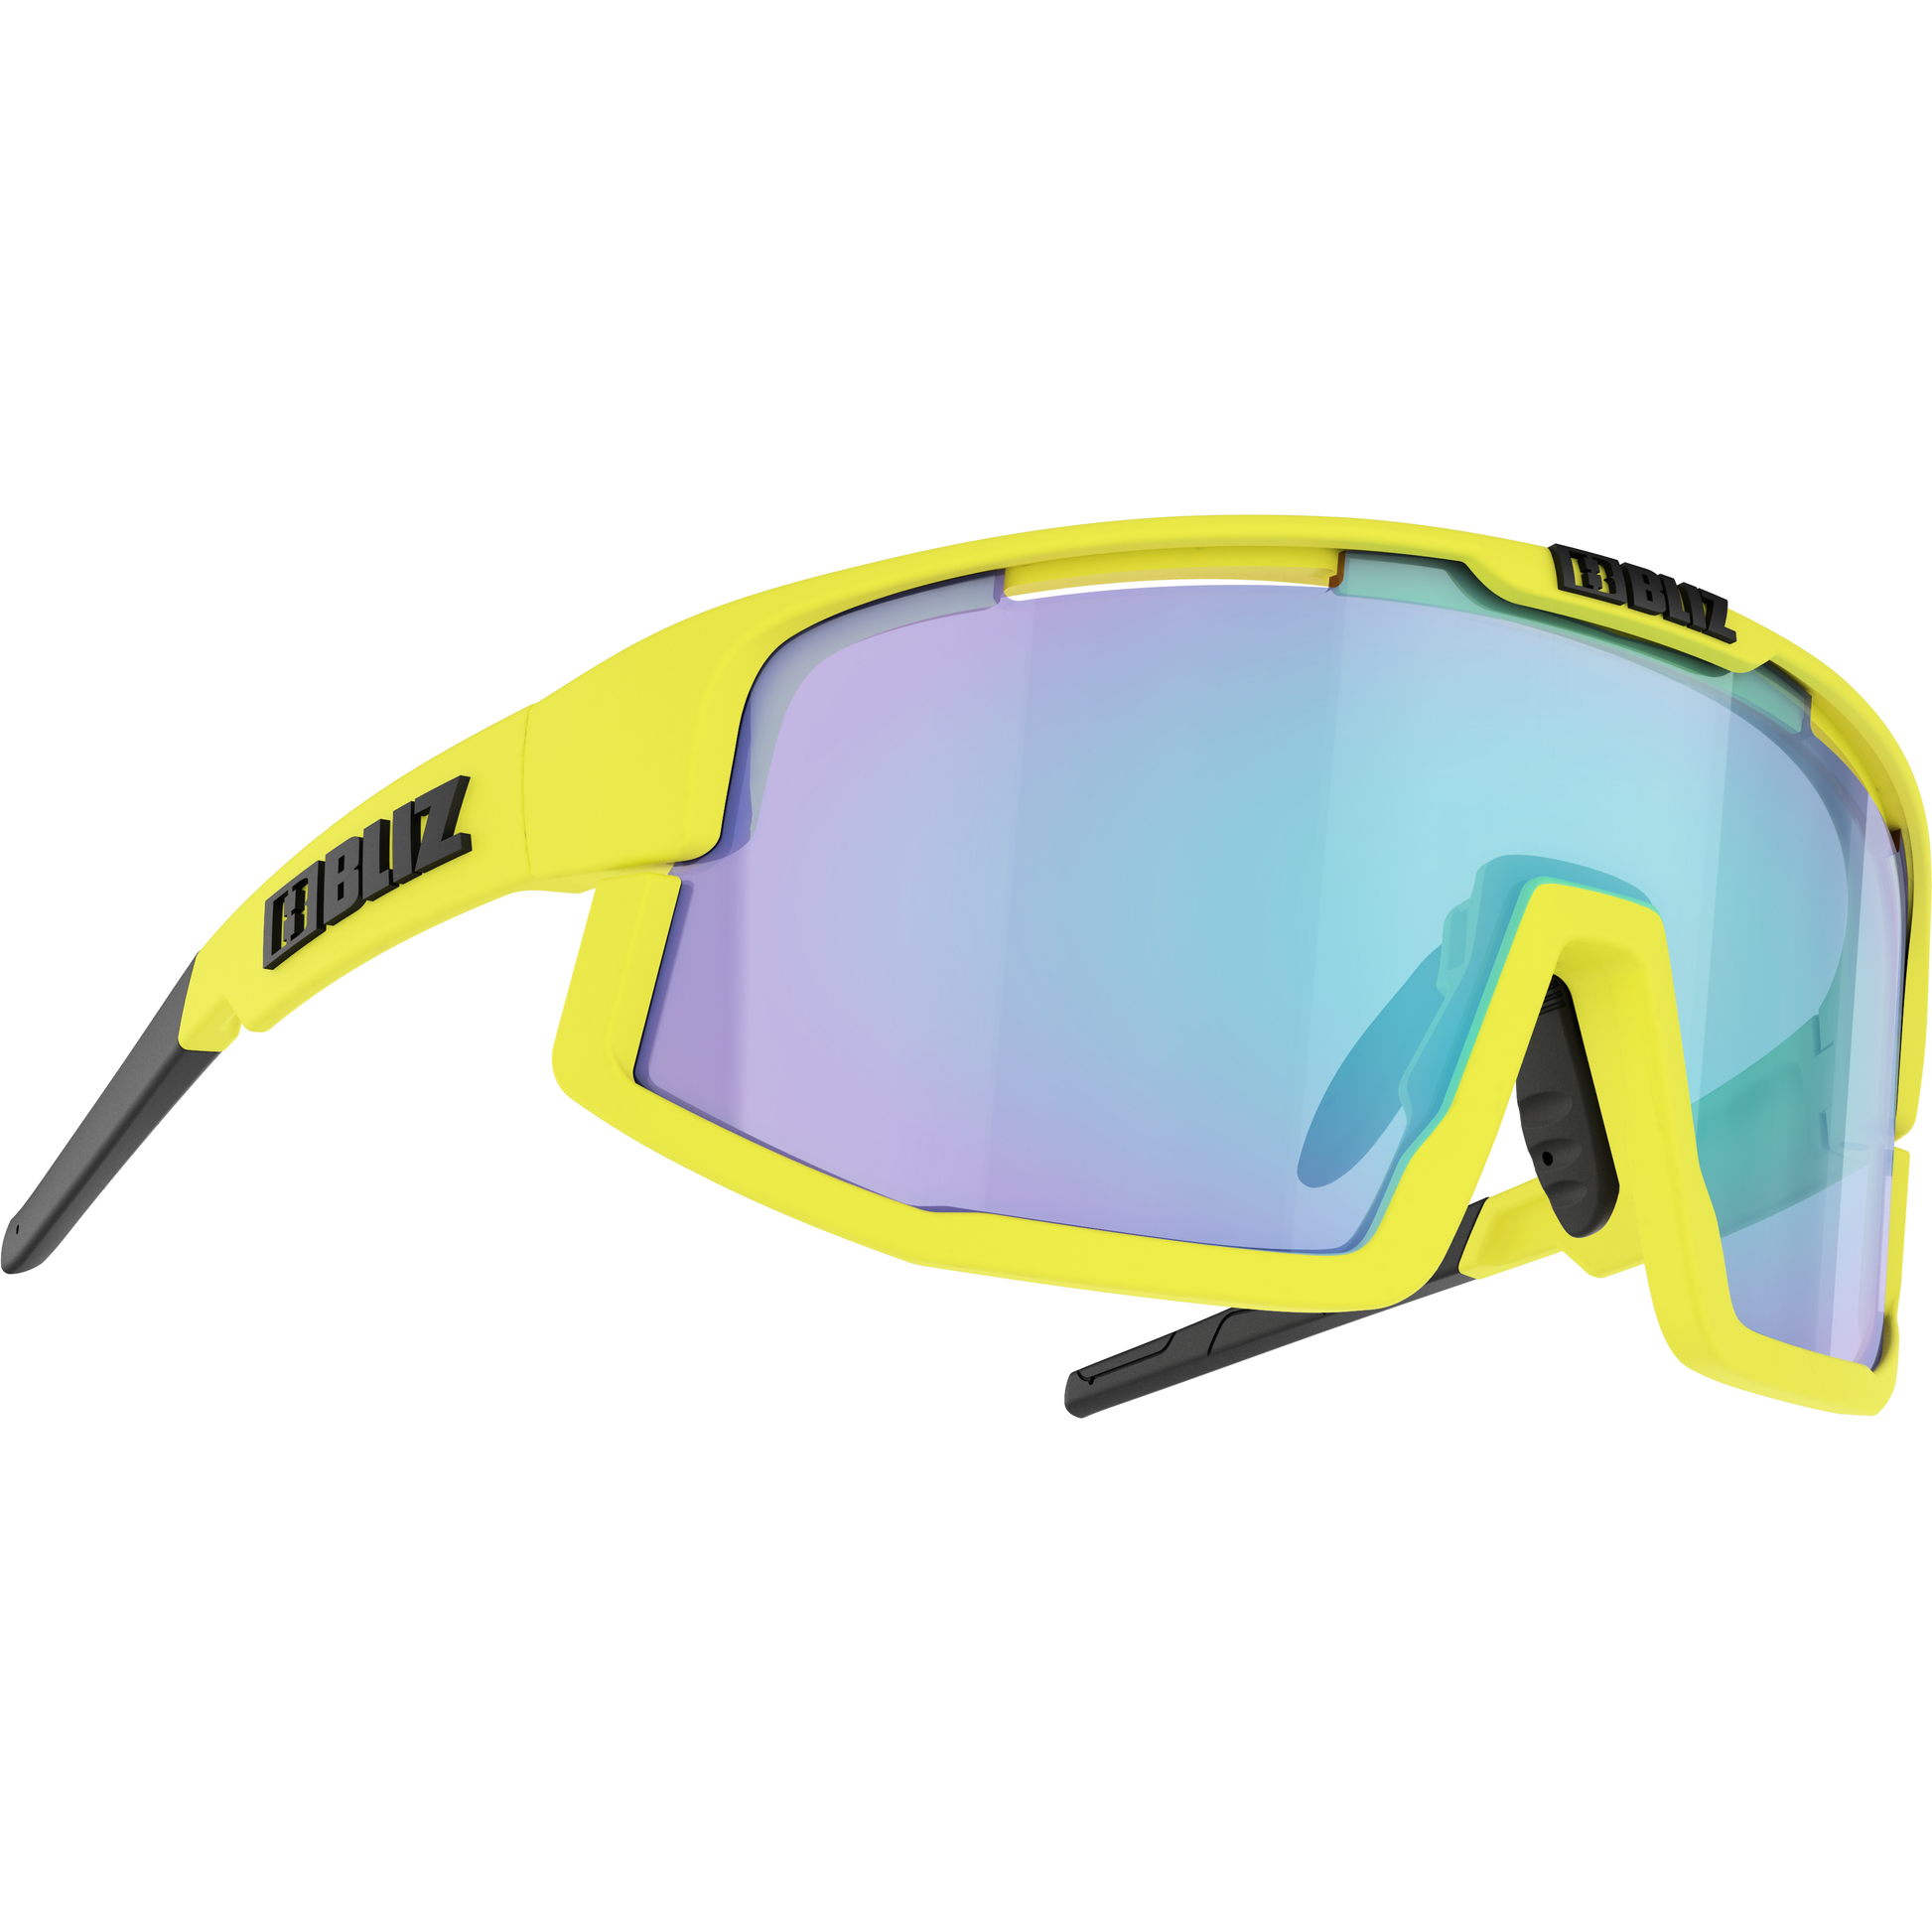 BLIZ Sunglasses One Size Vision, Matt Yellow / Smoke with Blue